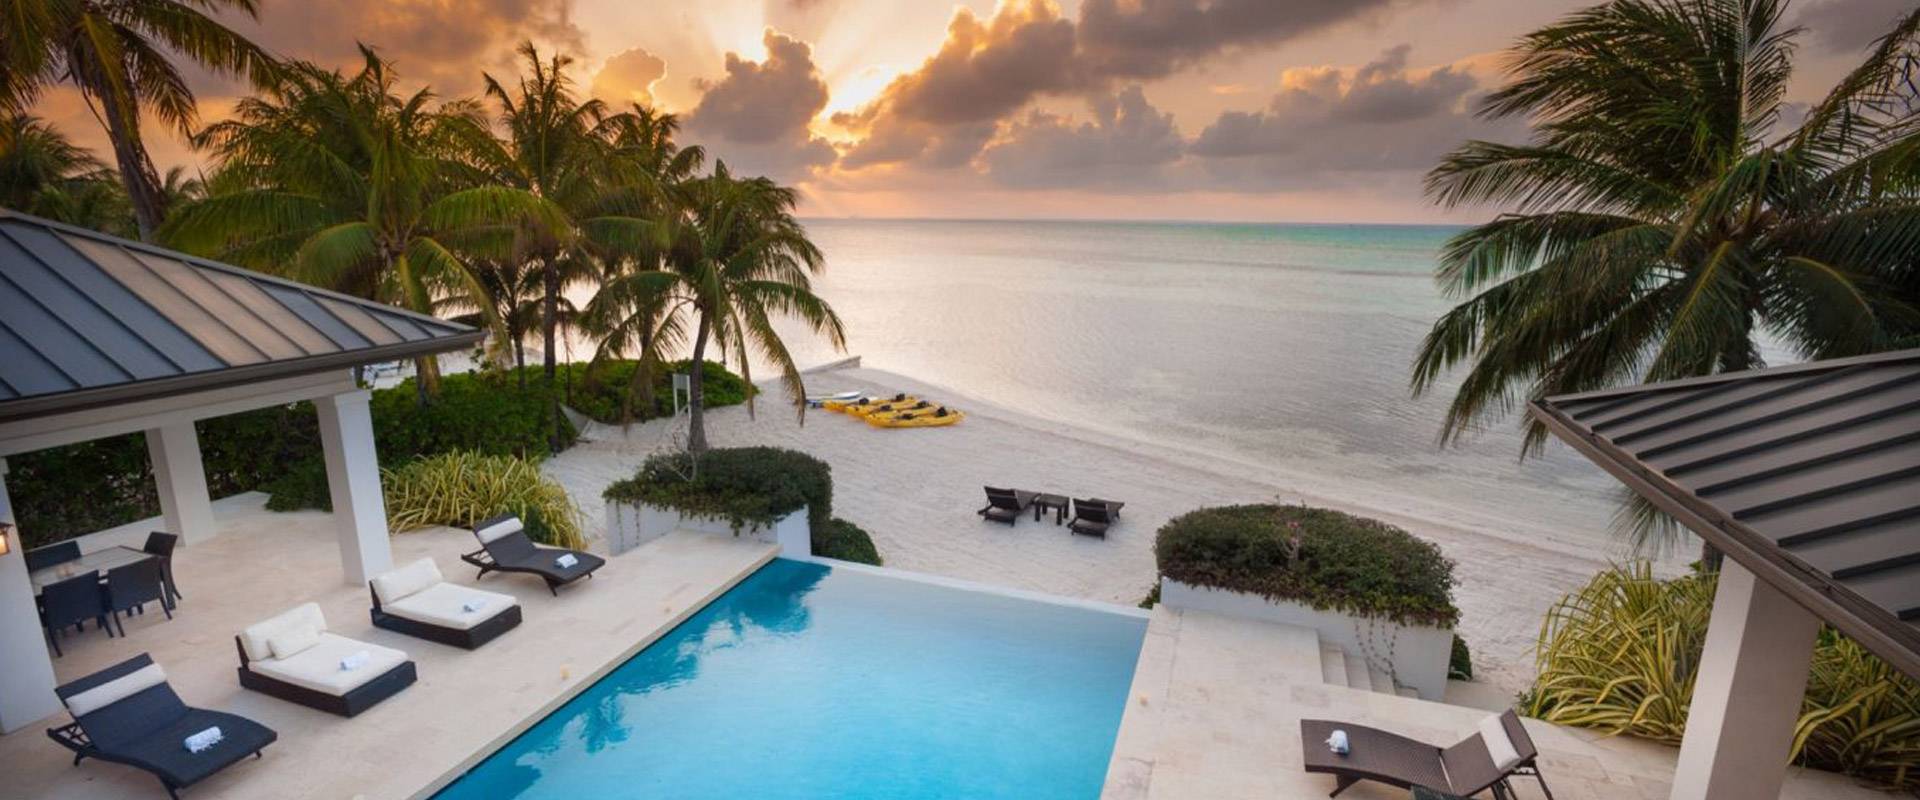 Luxury Villa Sun Cayman Islands 3